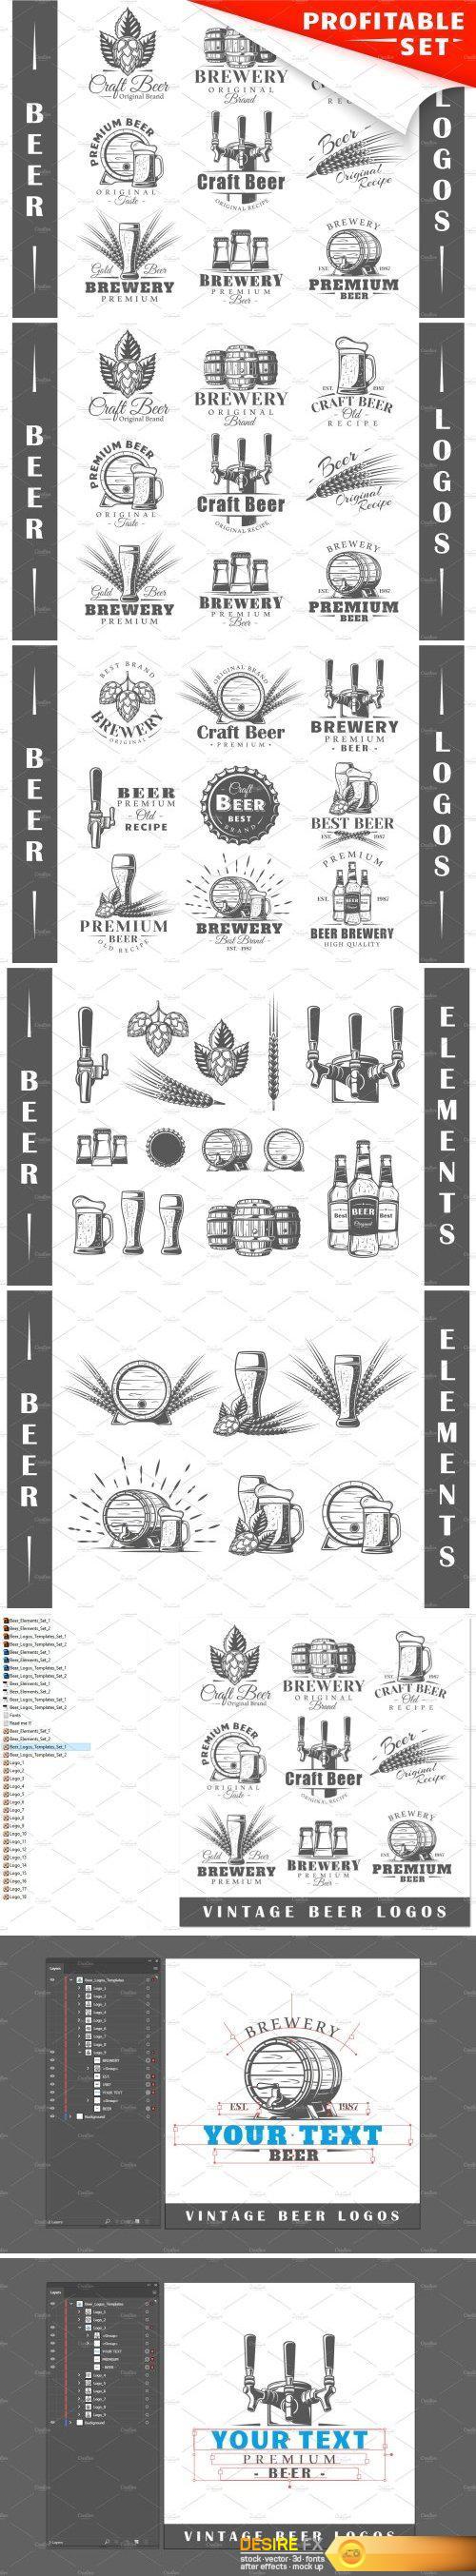 CM - 18 Beer Logos Templates 2142856